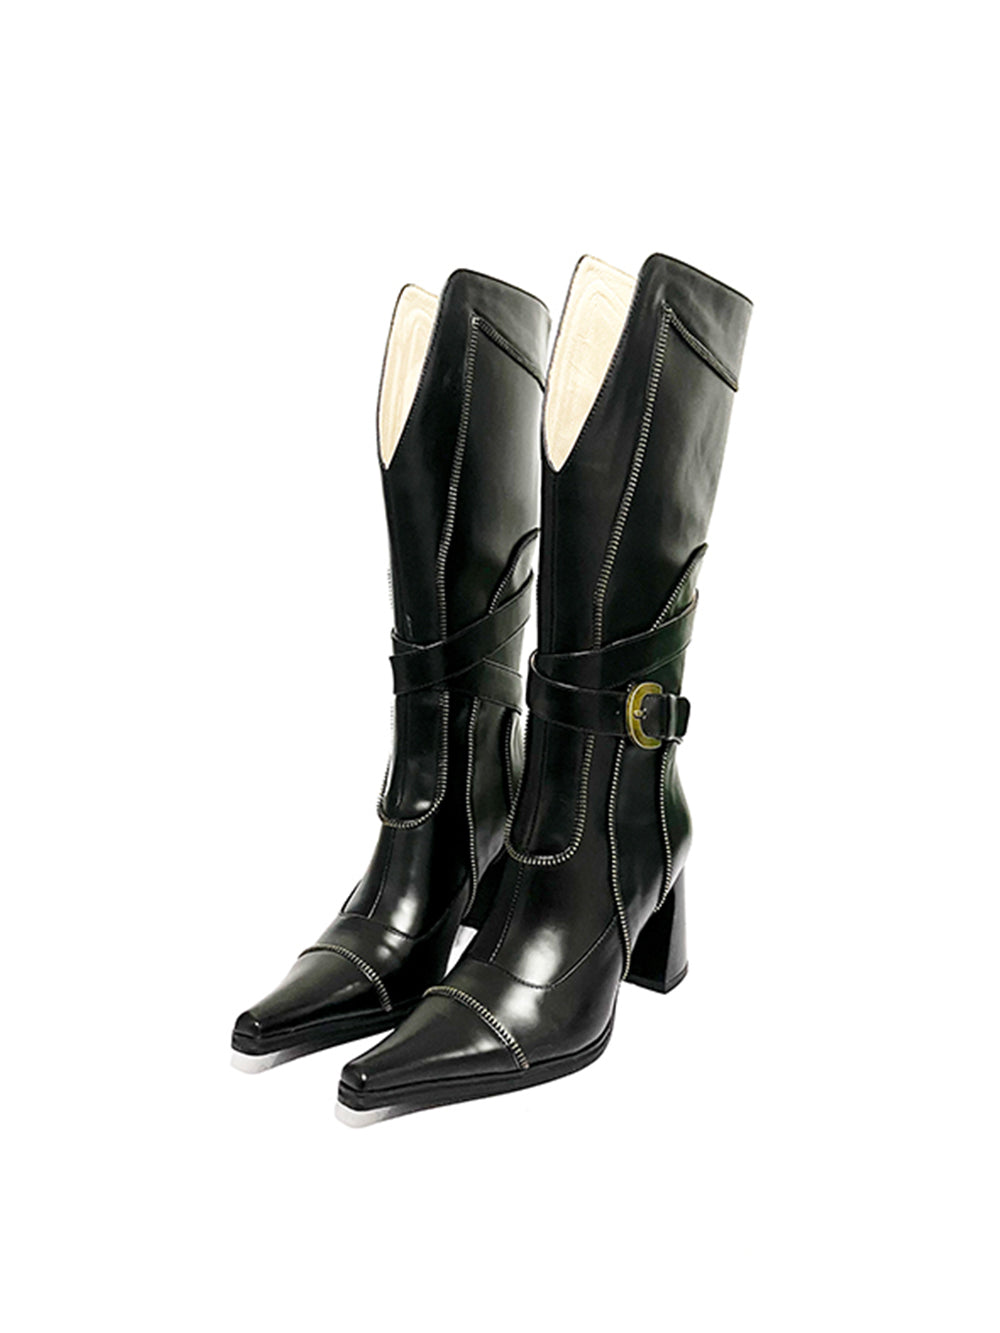 MUKTANK×AZ43 Black Pointed Shoes Distressed Zipper Trim Boots